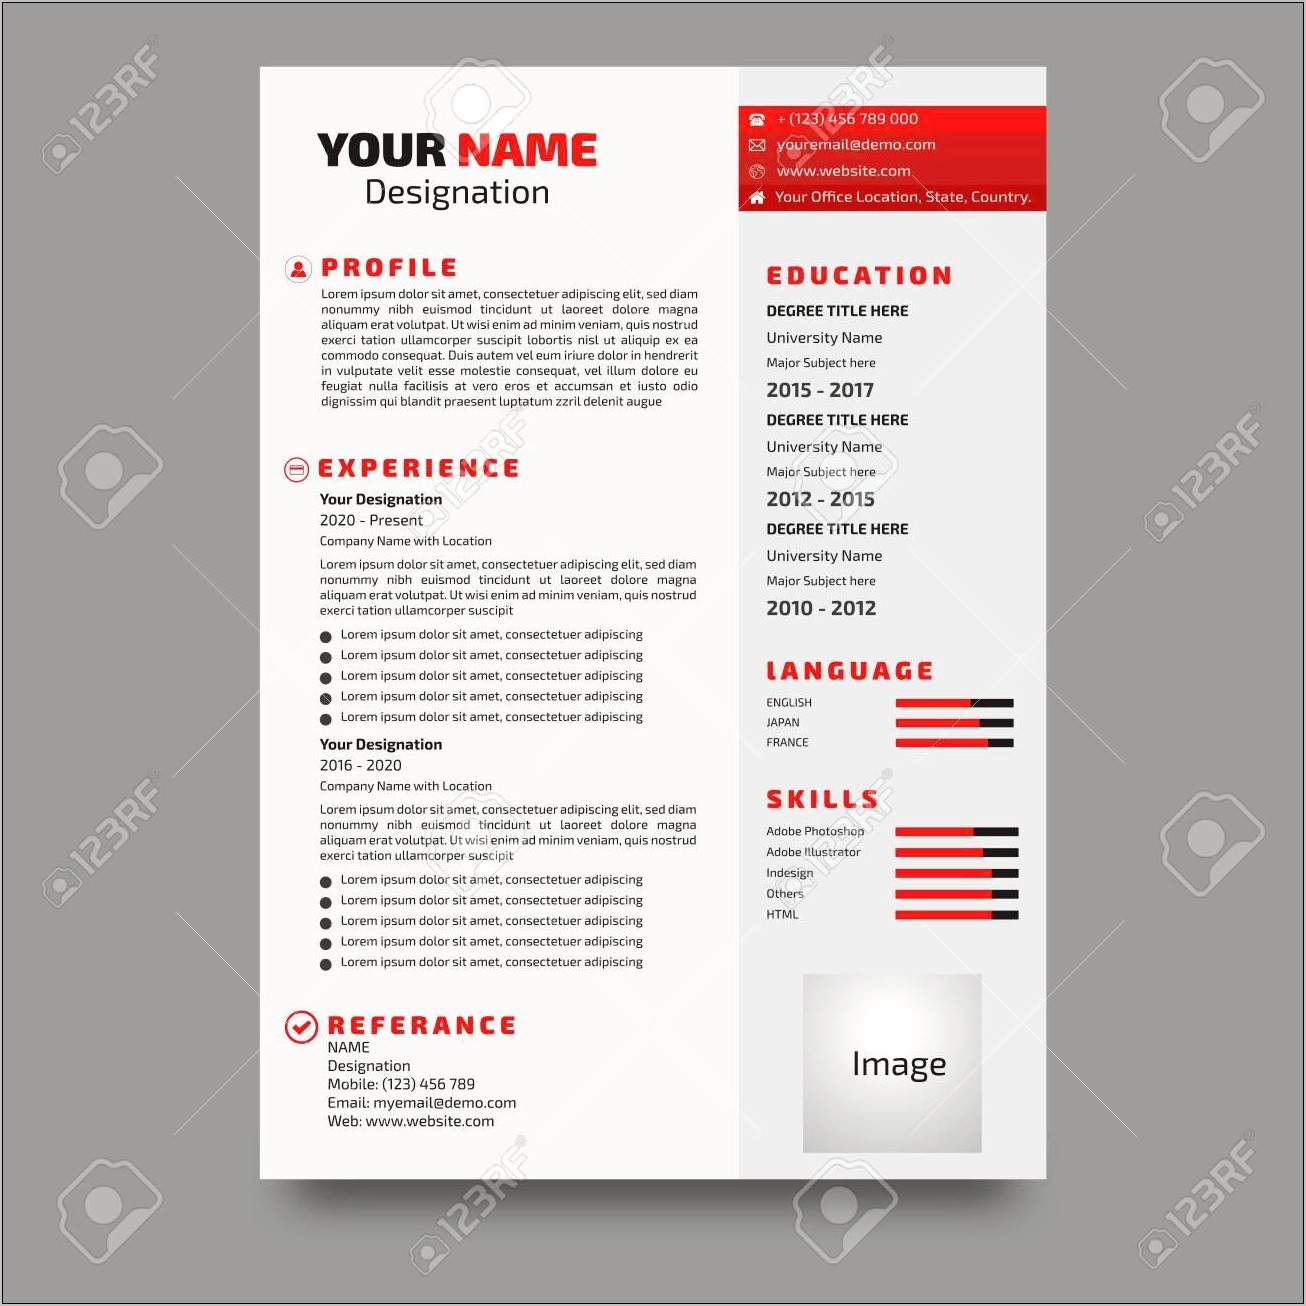 Sample Of Latest Resume Format 2012